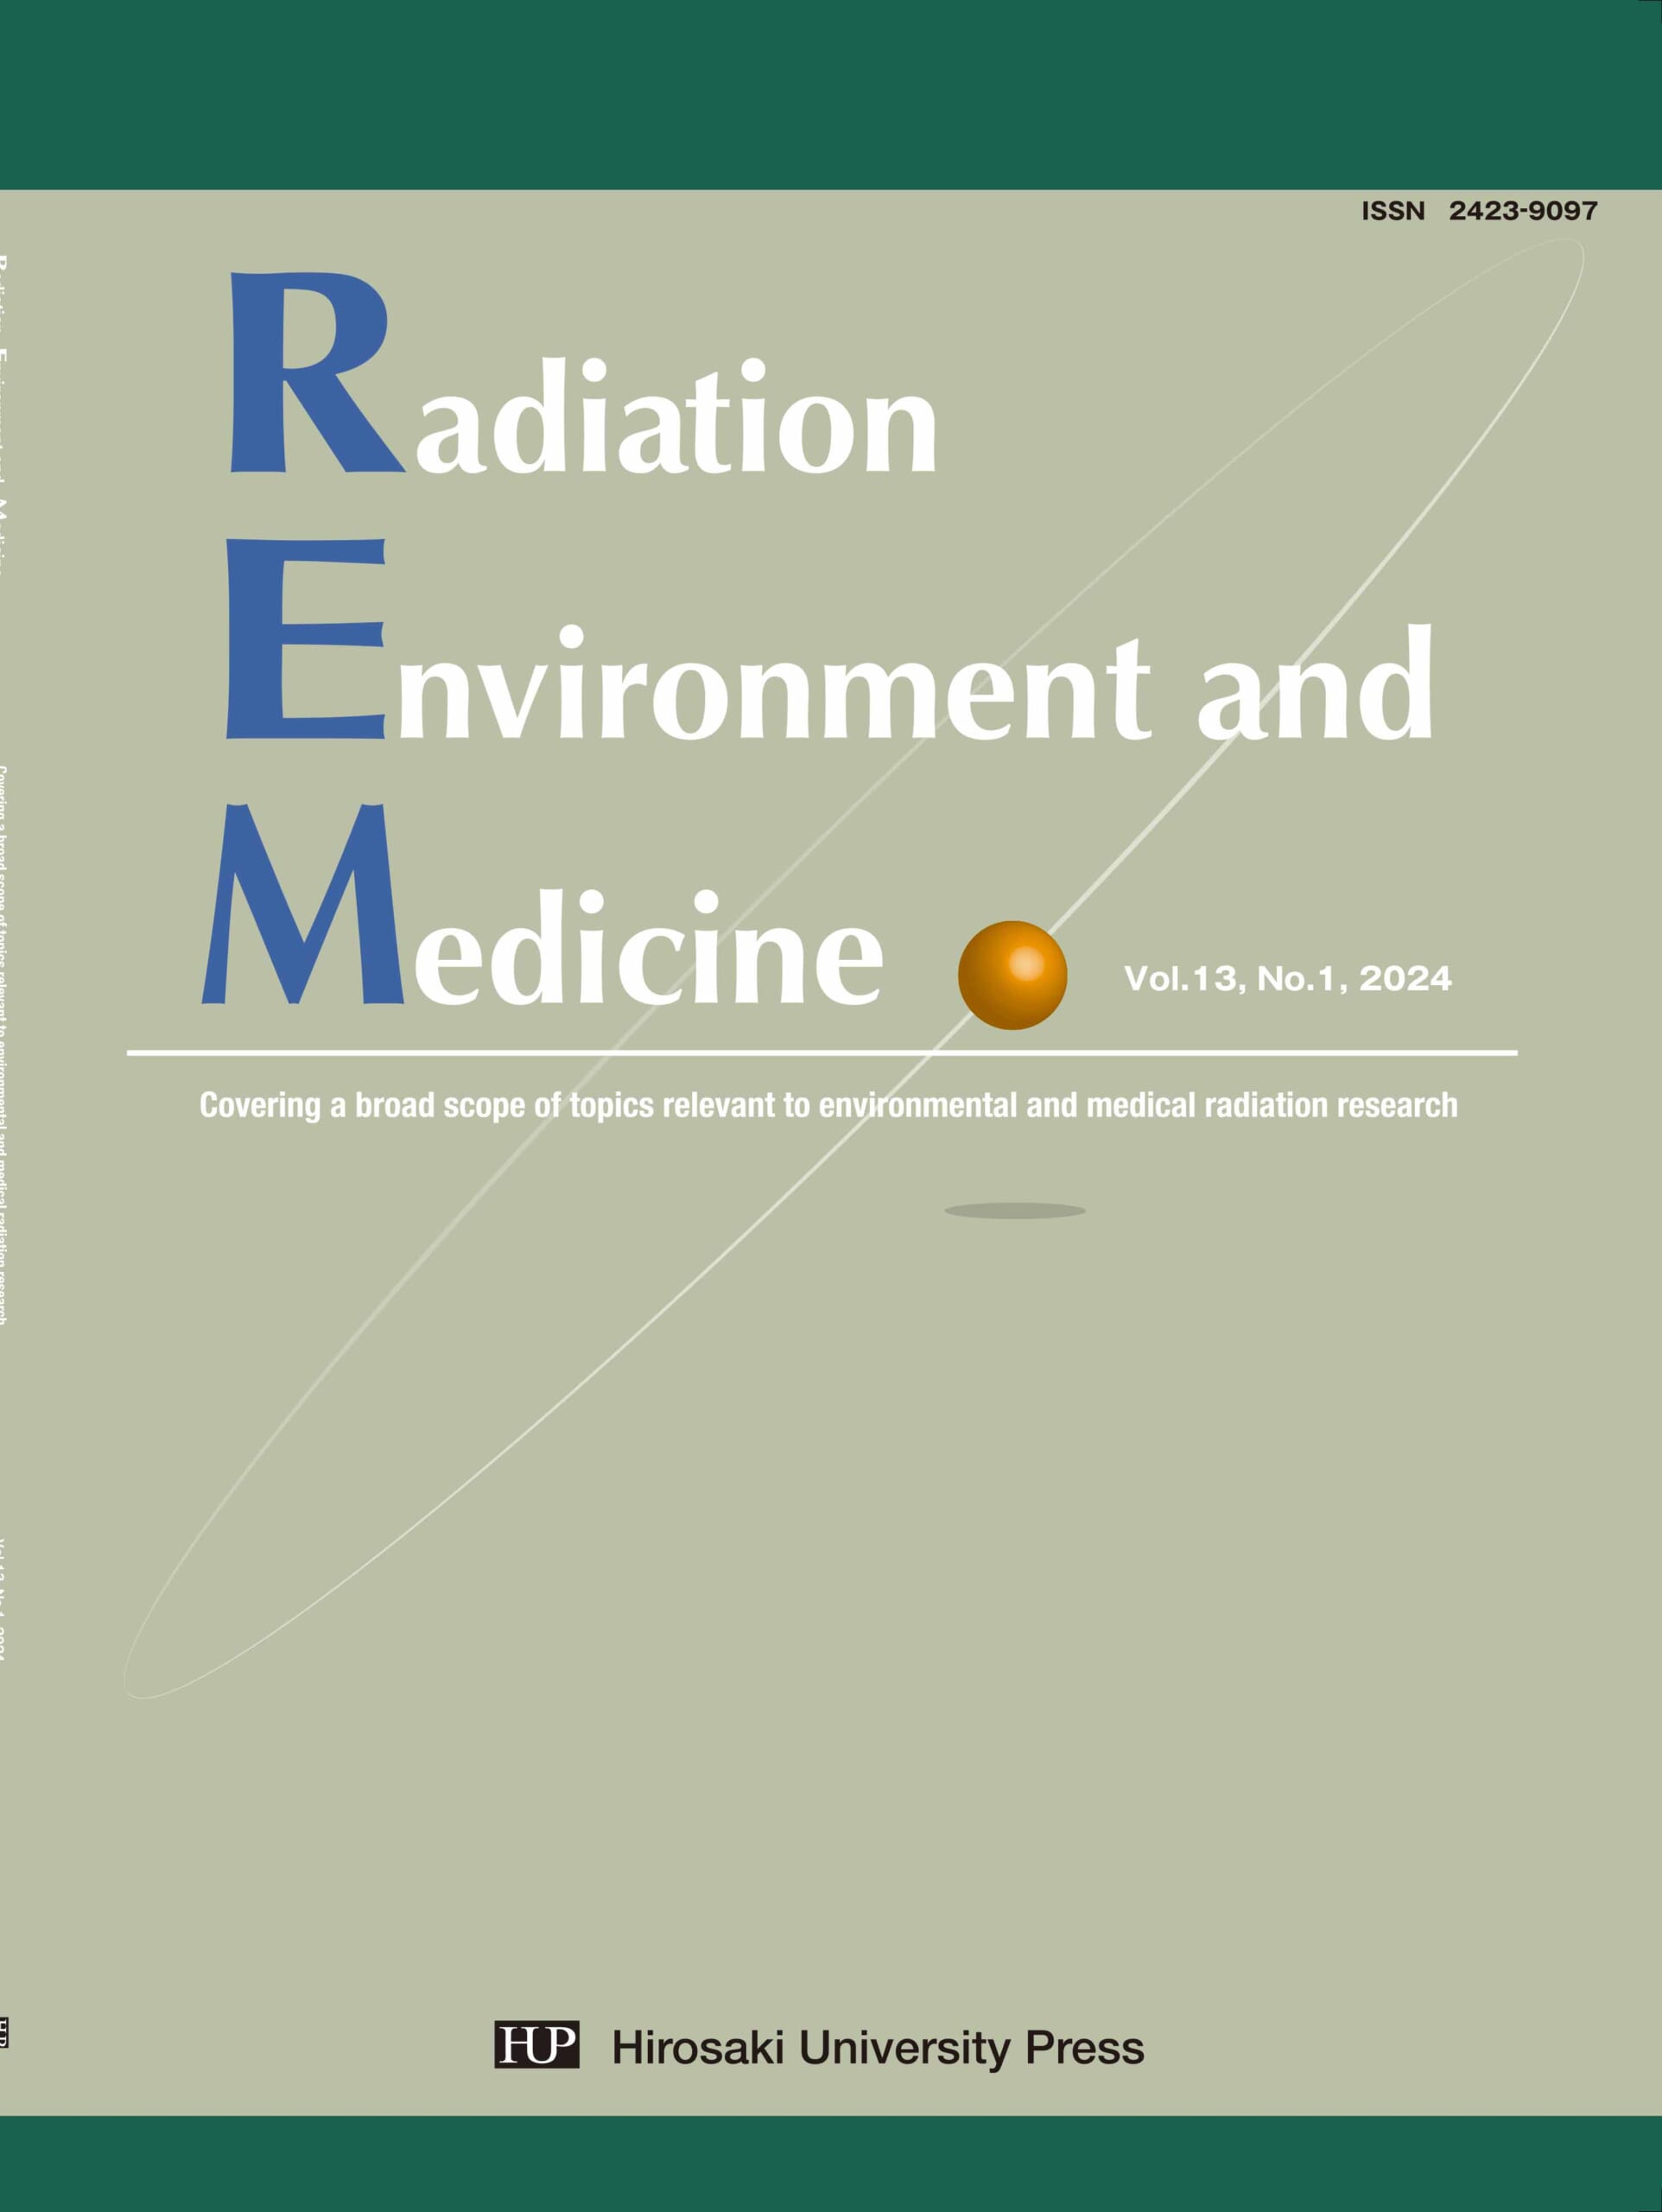 Radiation Environment and Medicine Vol.13, No.1 cover